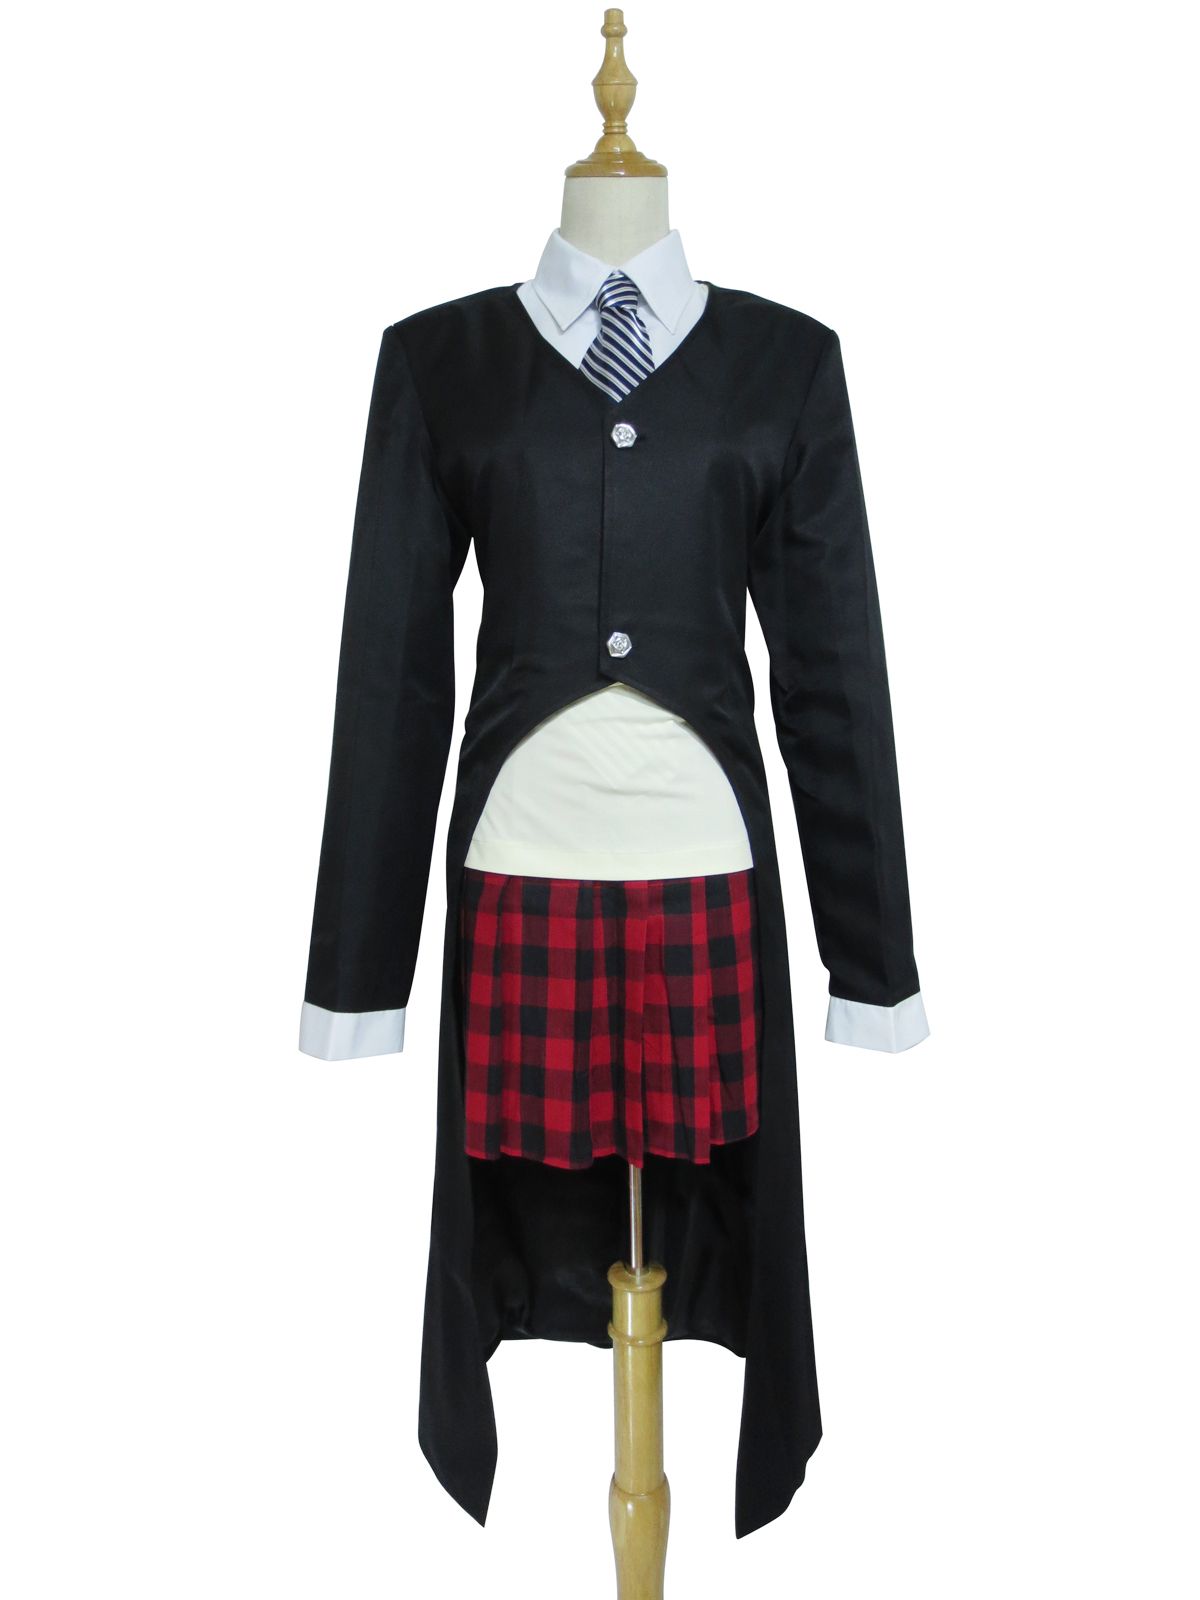 Soul Eater MAKA ALBARN Uniform Full Suit Custom Made Cosplay Costume Outfit